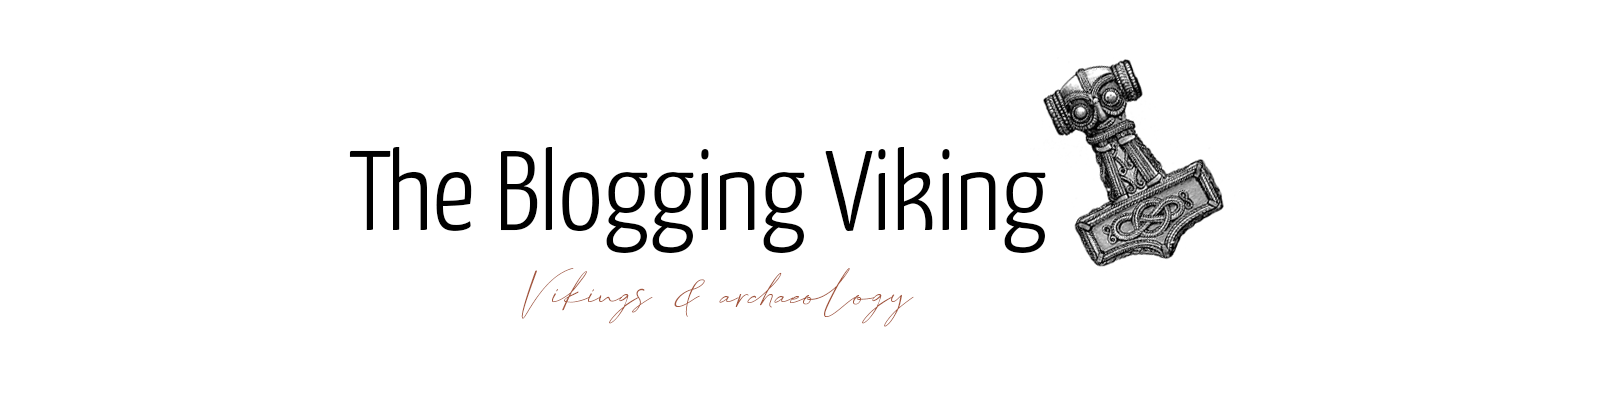 The Blogging Viking